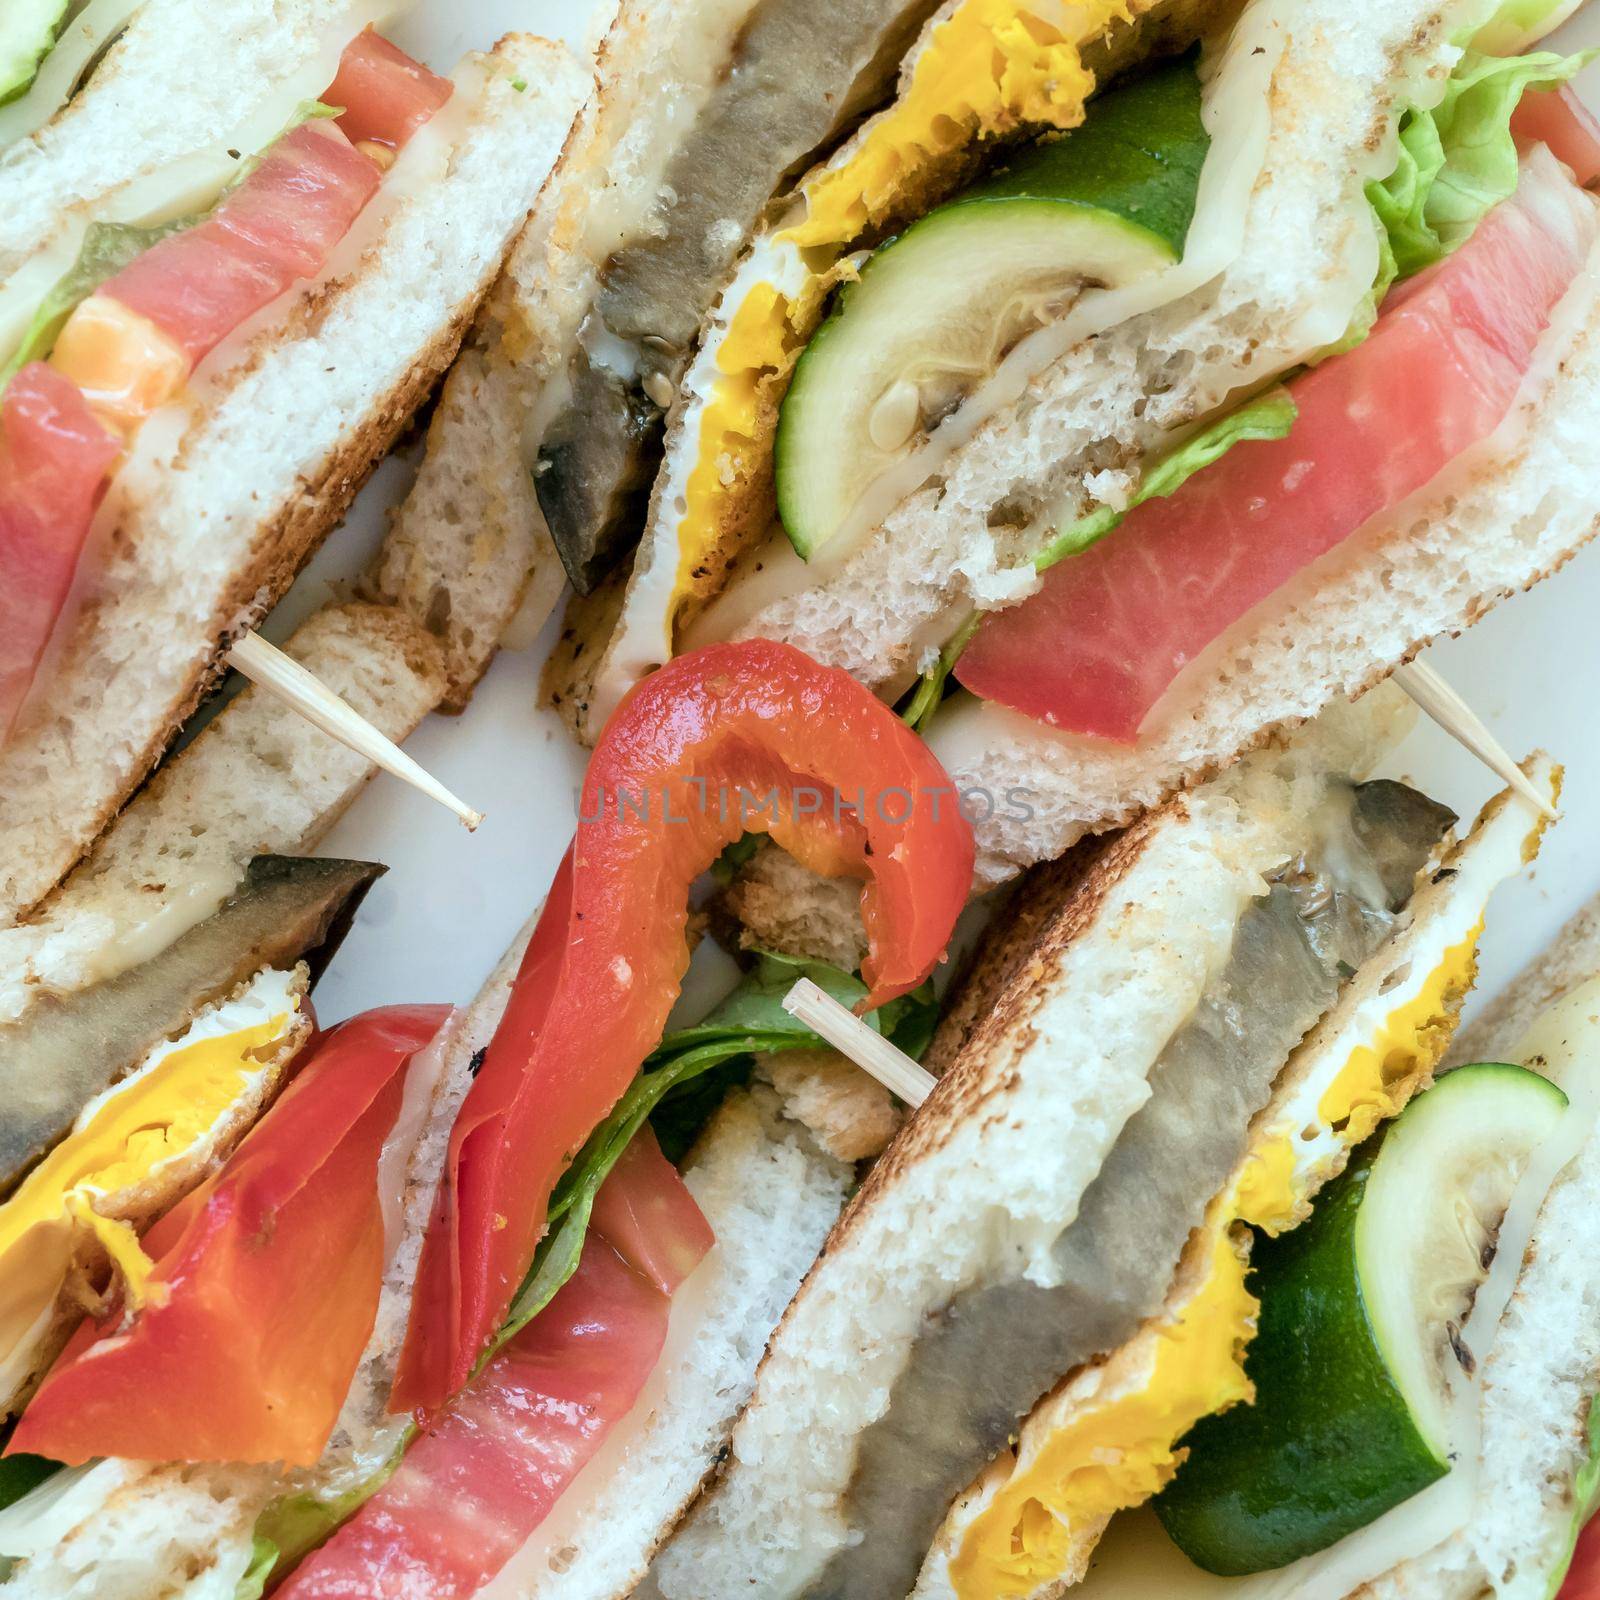 Vegetarian sandwiches tramezzini by germanopoli